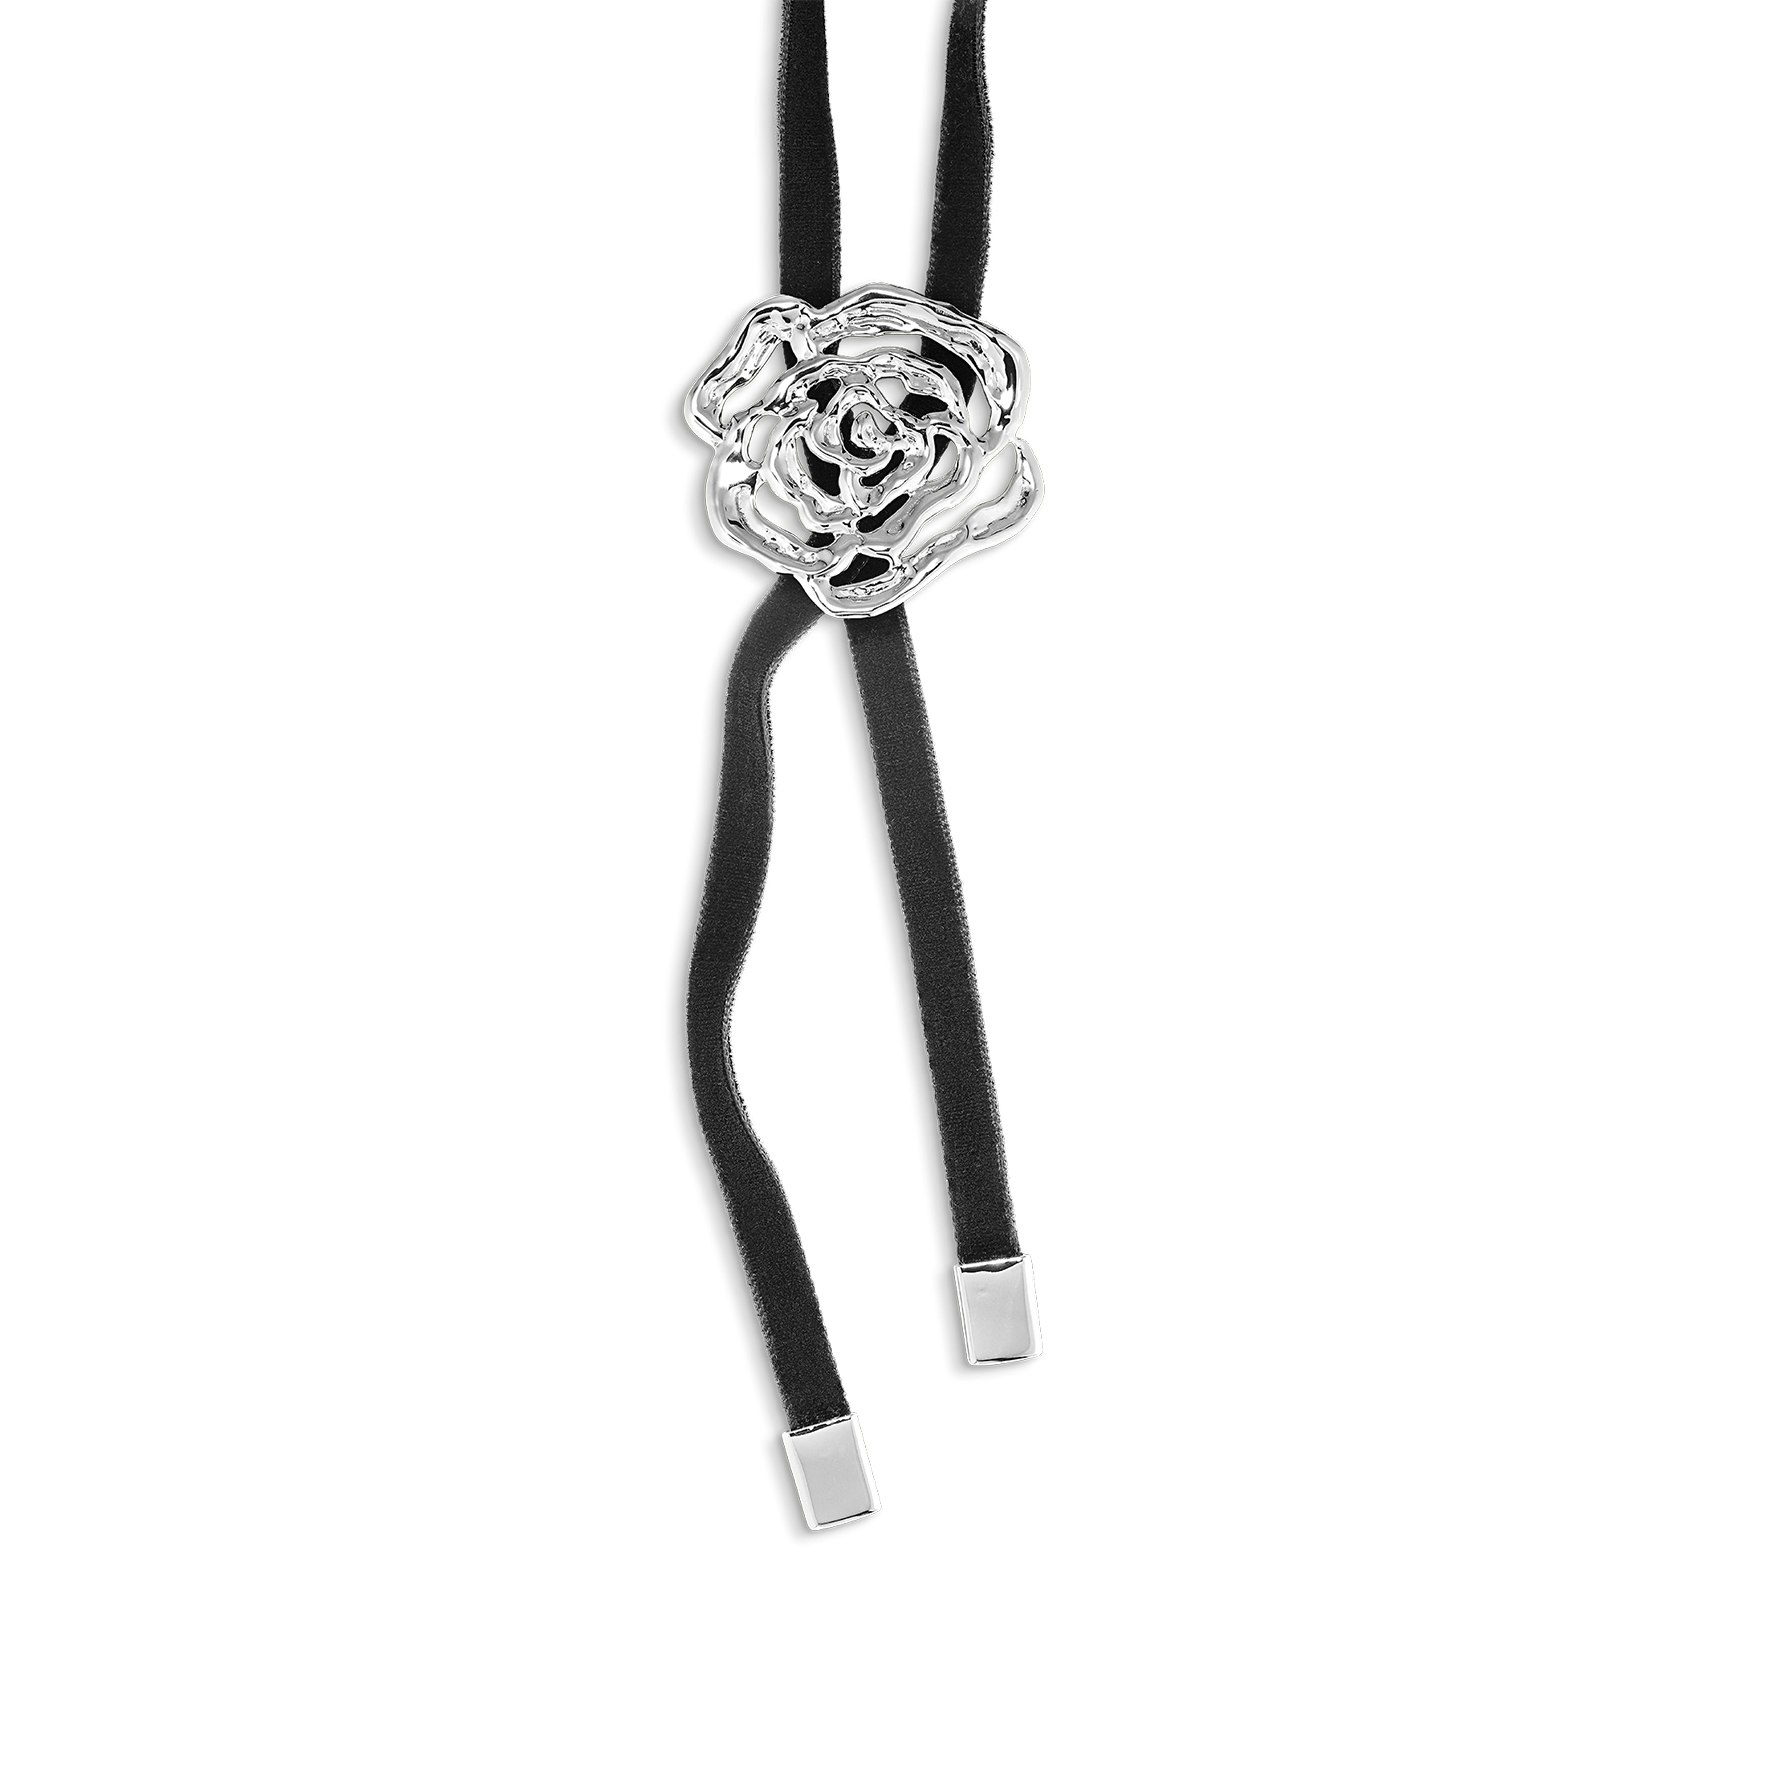 Rosle Bolo Tie Necklace från Jane Kønig i Silver Sterling 925